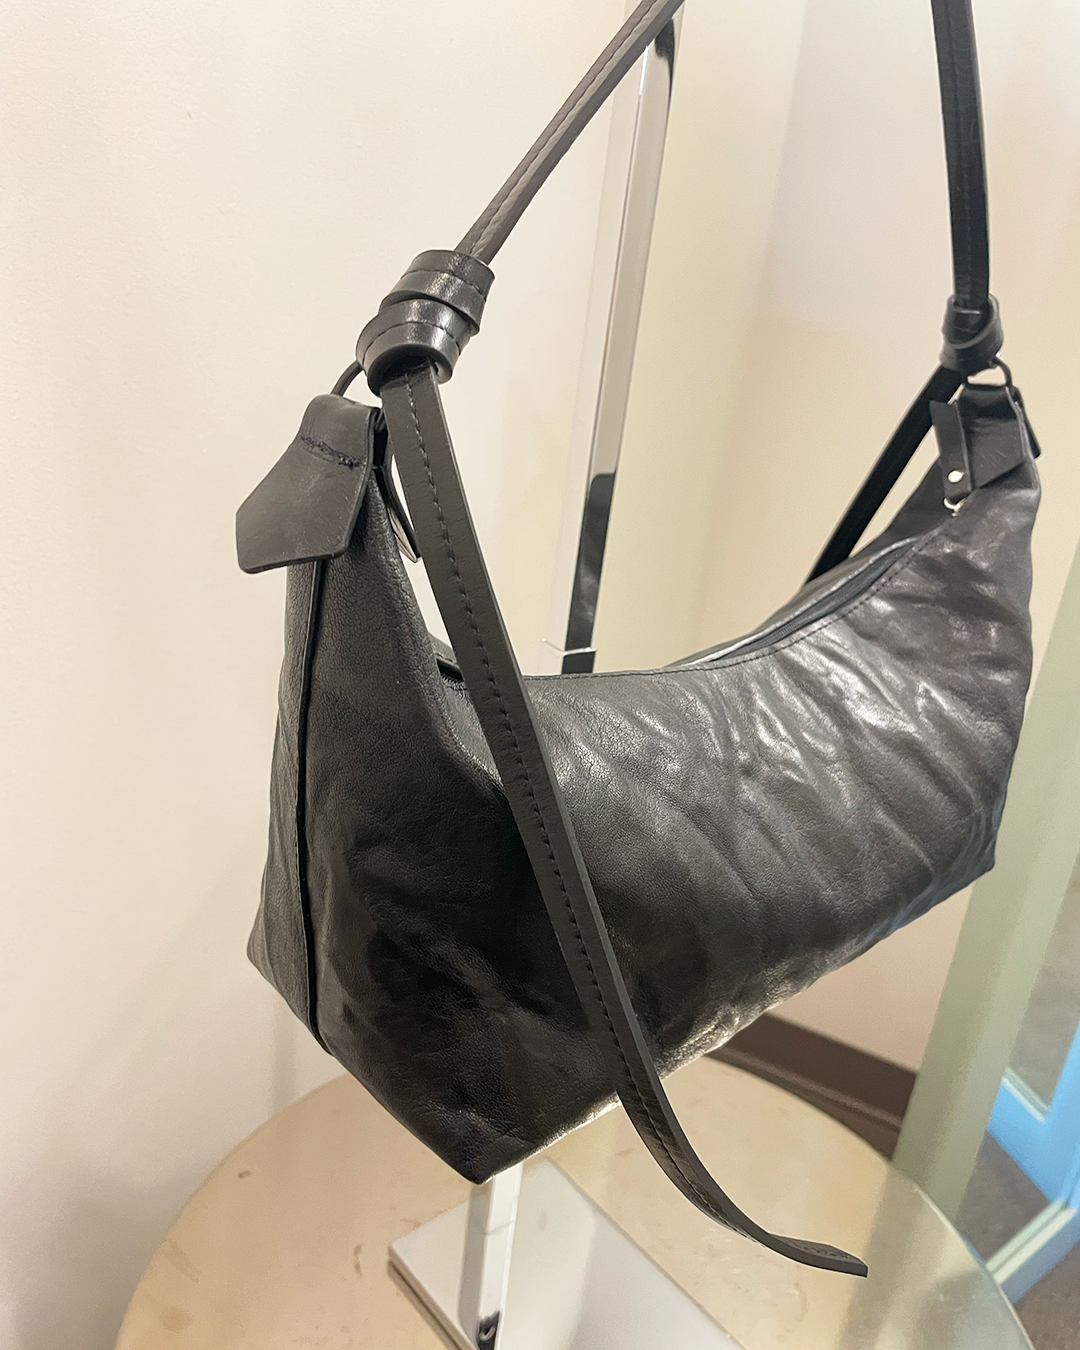 by — May Rumpled Sling Bags Kent\'s Bag Boutique Tampa Sheepskin in Deborah South Basalt B. Zippered